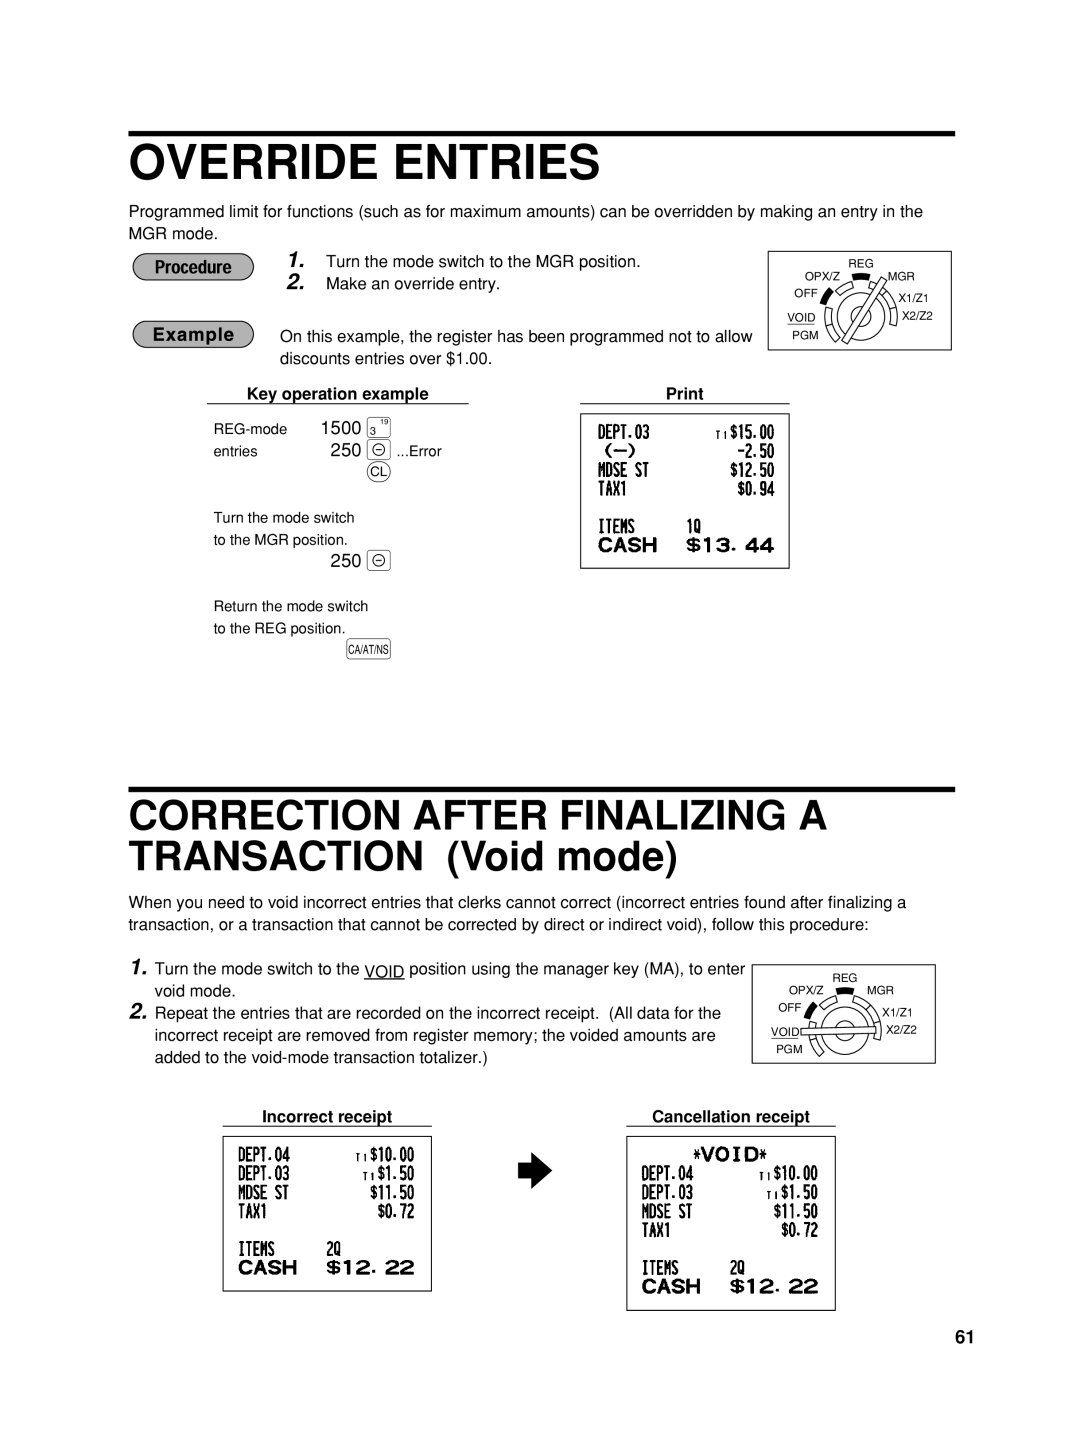 Sharp TINSZ2600RCZZ Override Entries, CORRECTION AFTER FINALIZING A TRANSACTION Void mode, Incorrect receipt, 1500, Print 